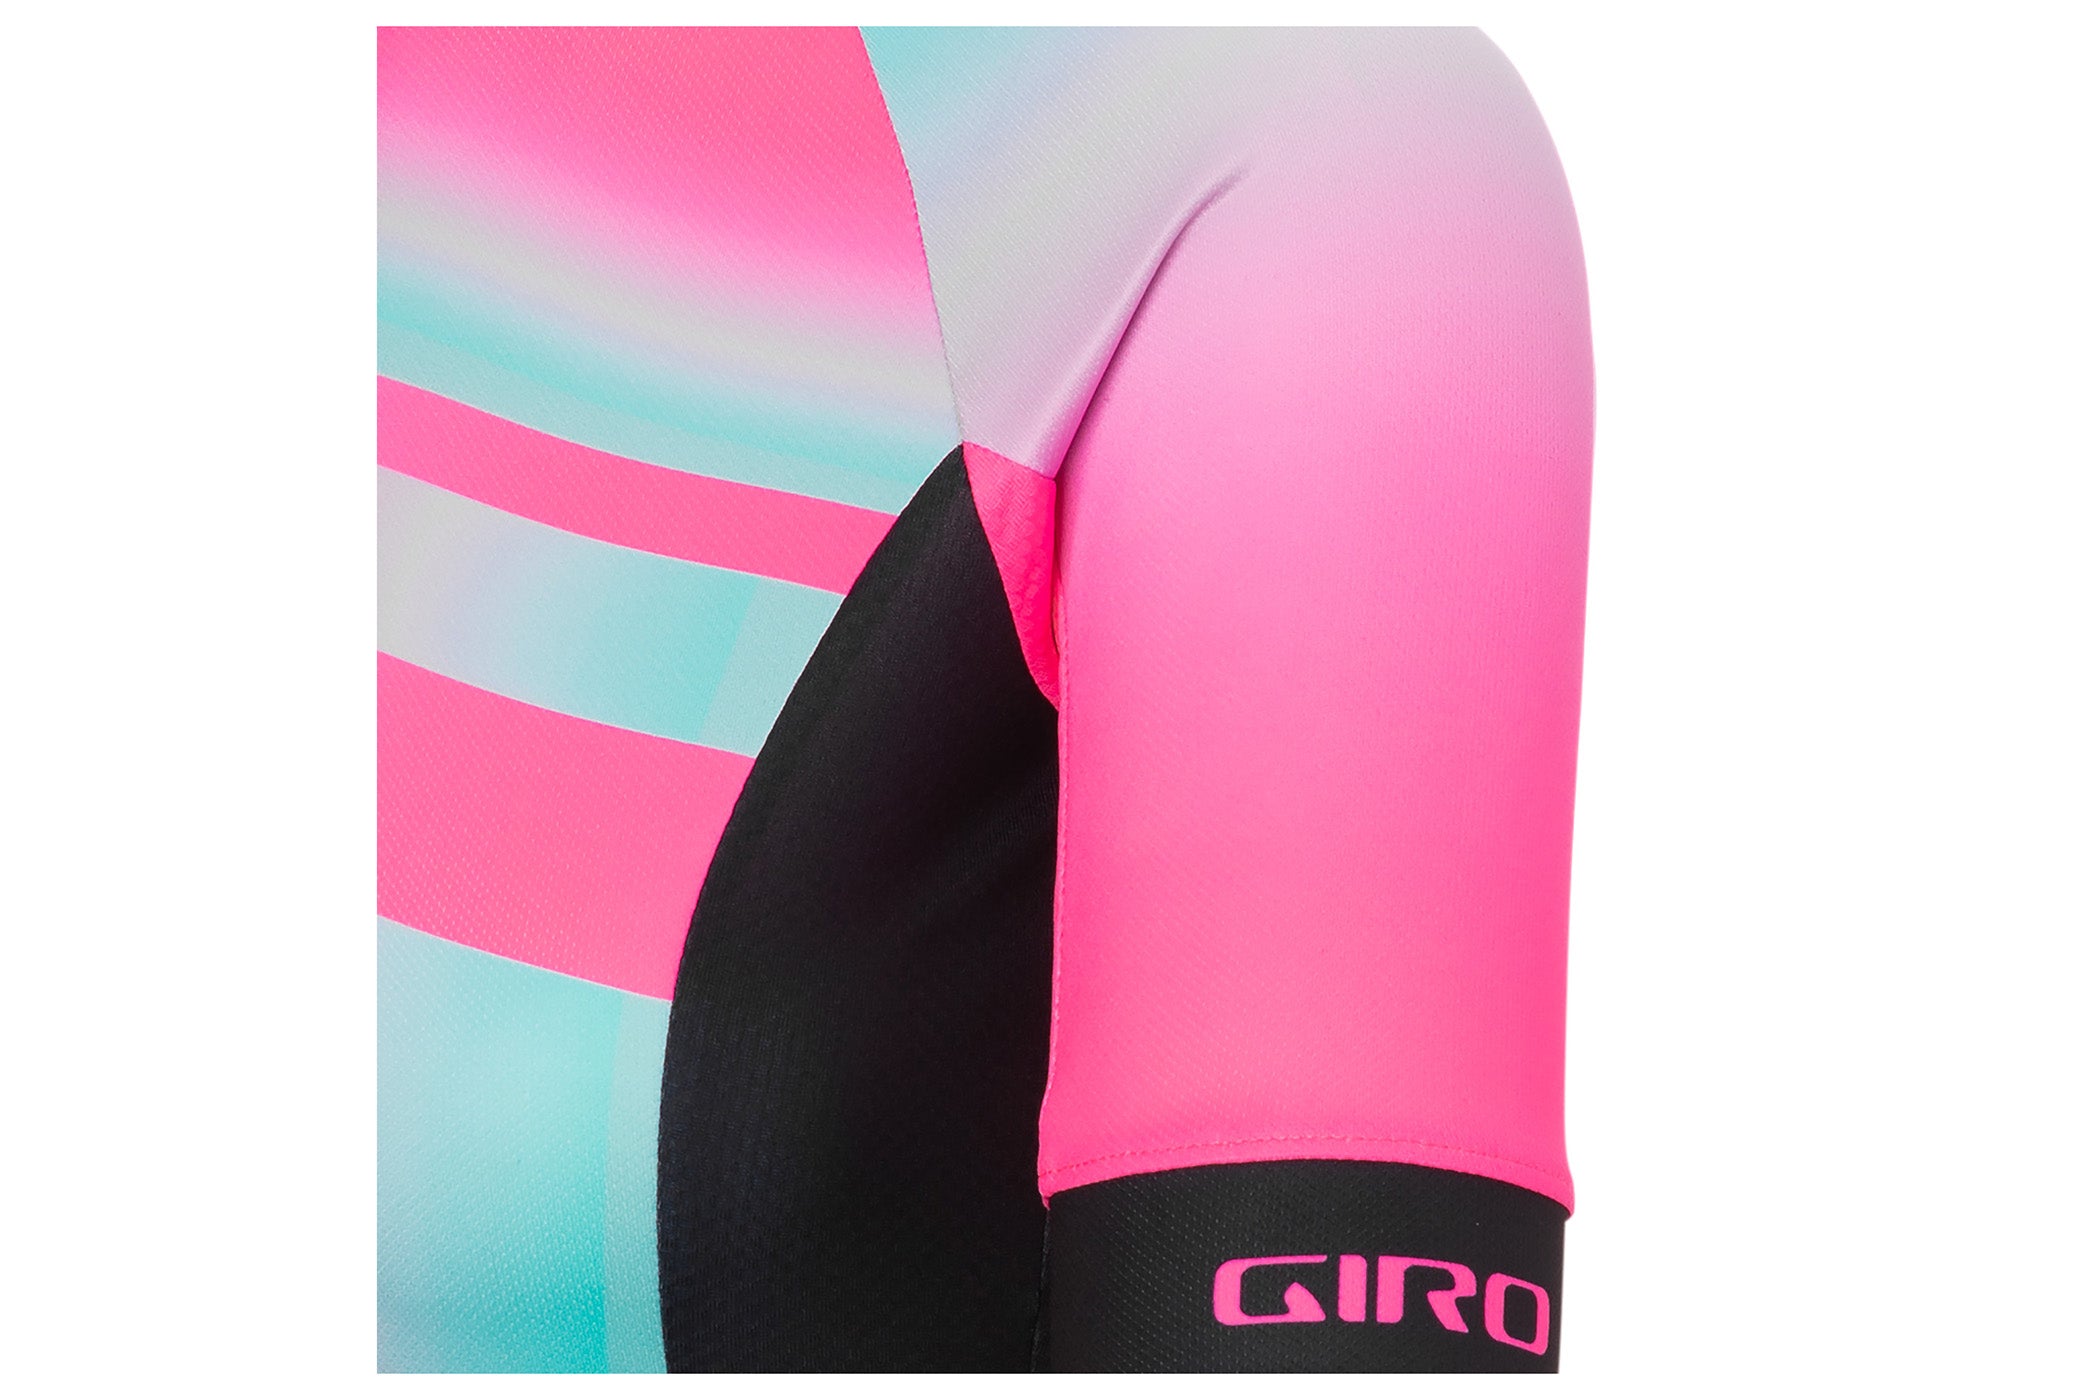 Giro Women's Chrono Sport Jersey